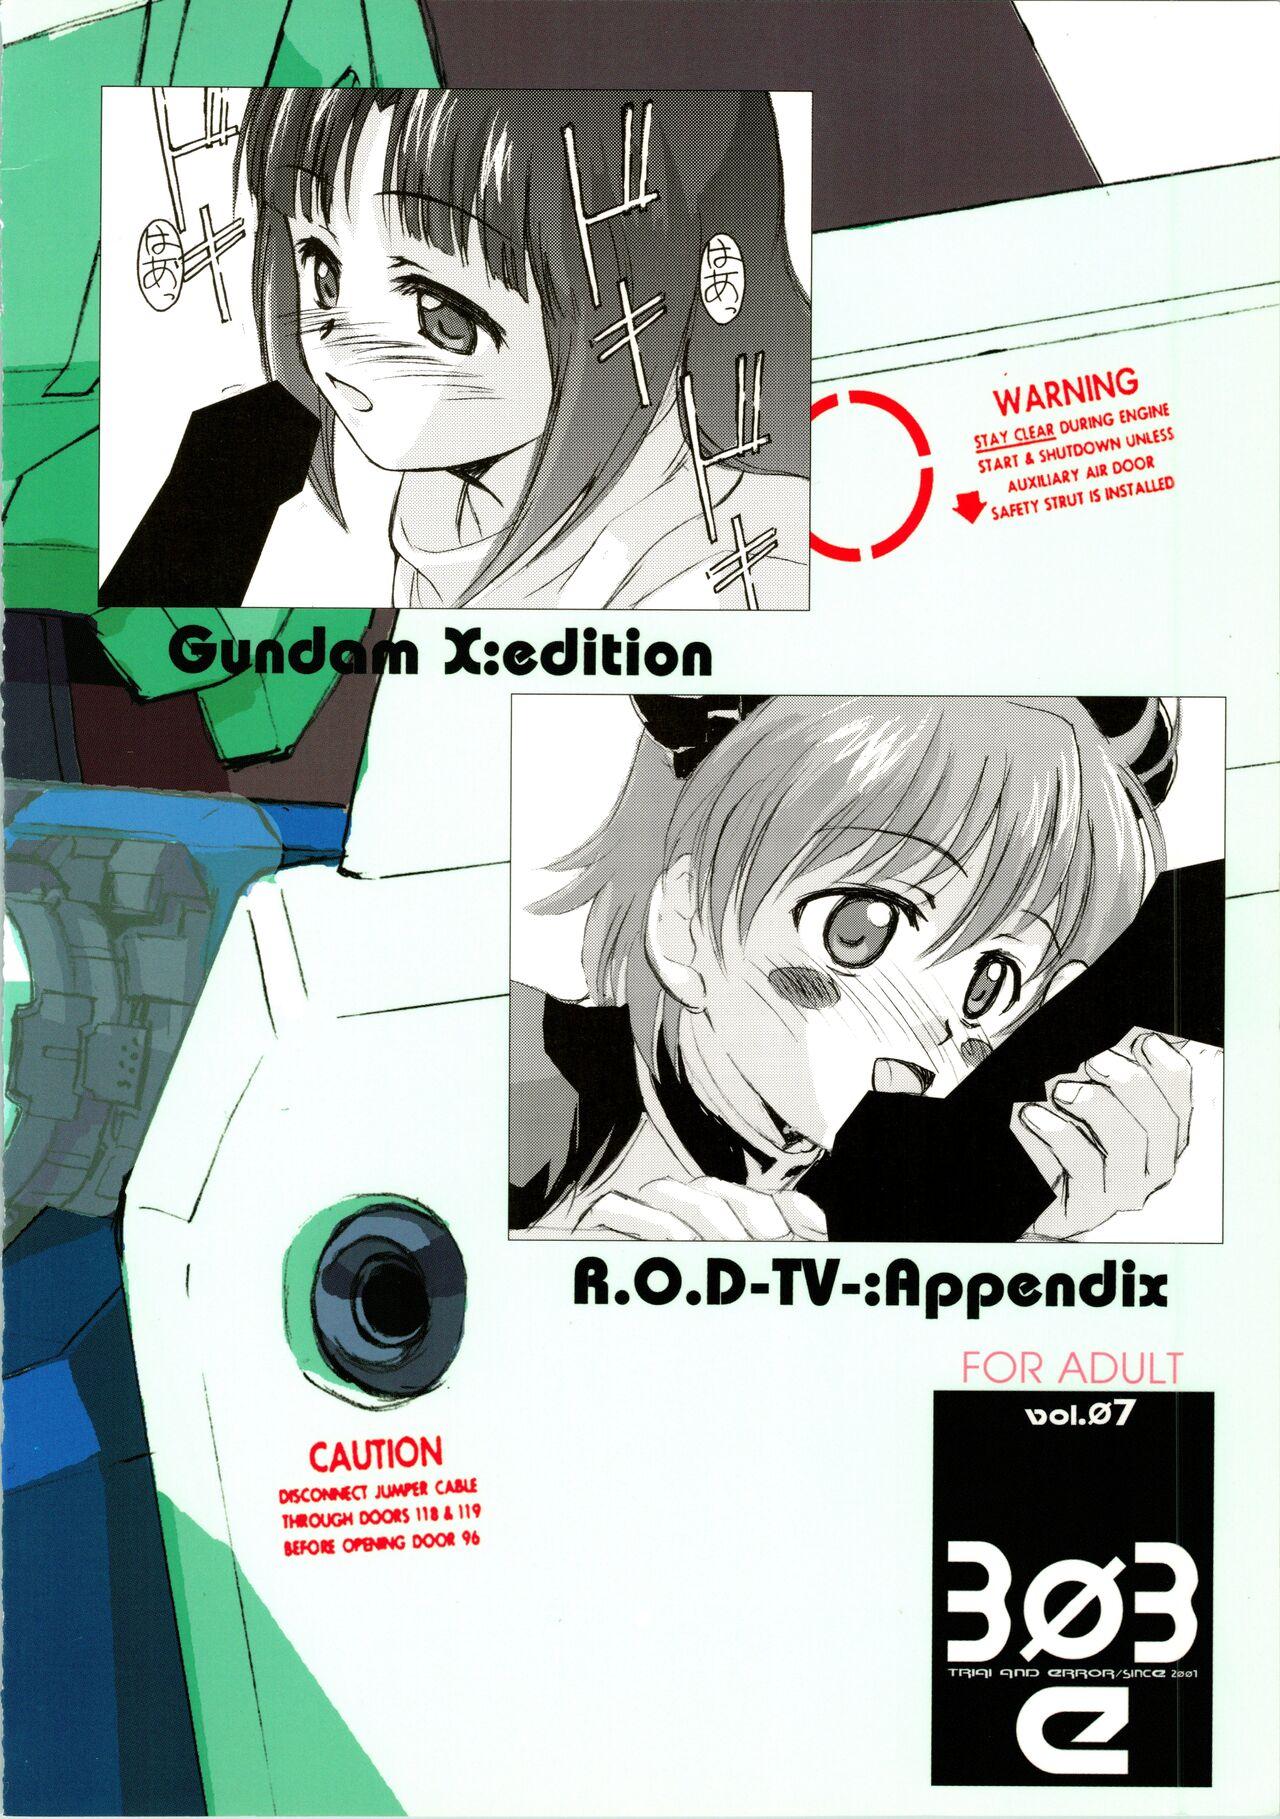 [WINDFALL (Aburaage)] 303e Vol. 07 (Gundam X, R.O.D the TV) ZHOA8229 27